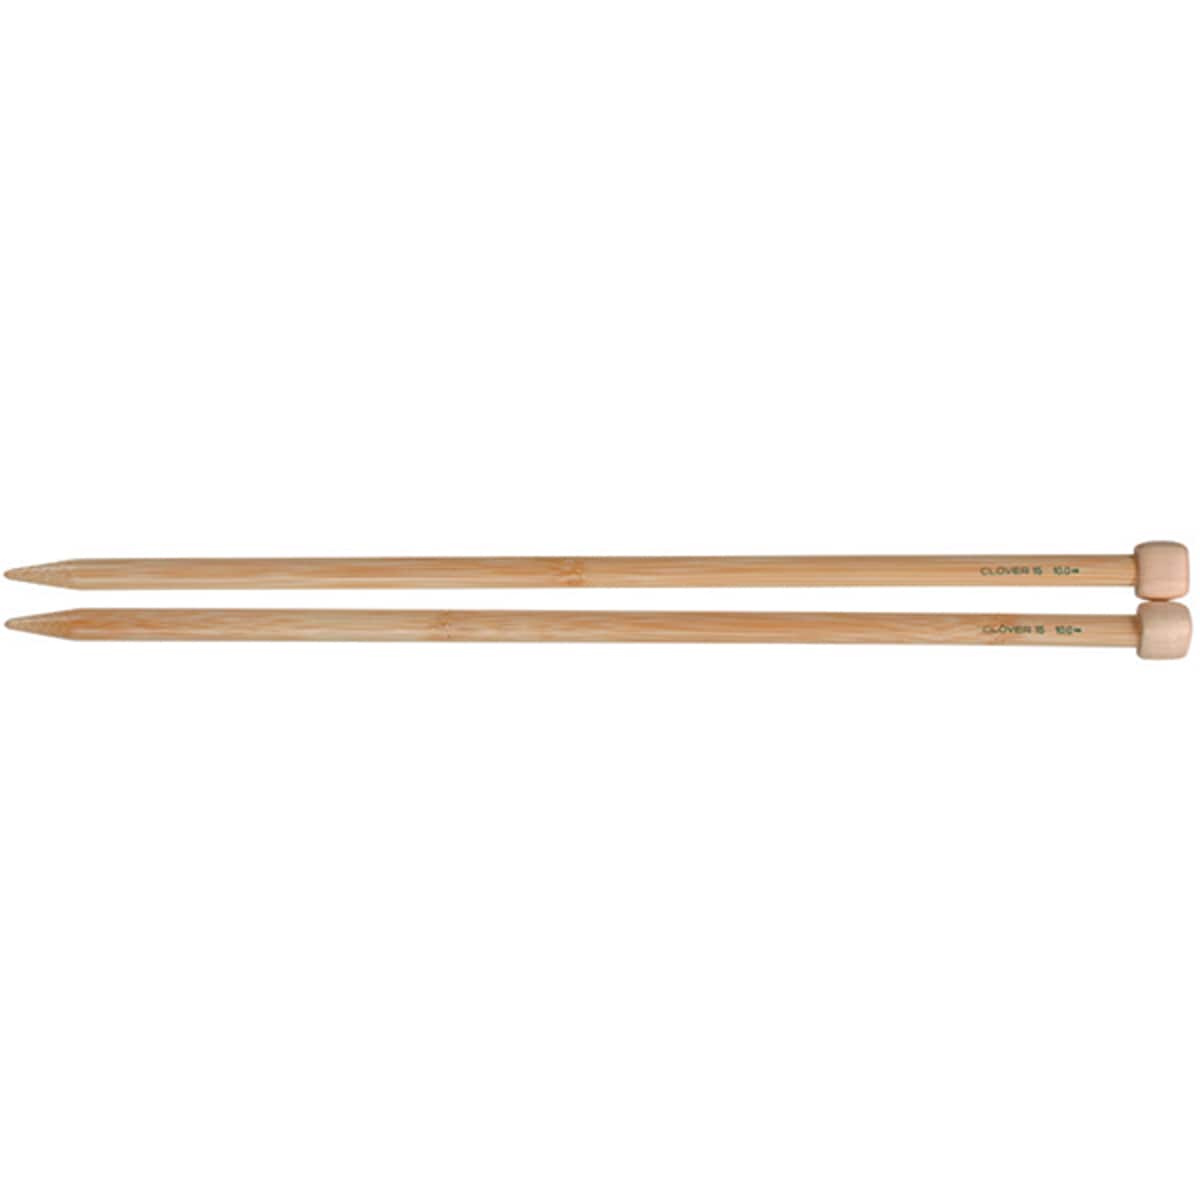 Bamboo Single Point Knitting Needles 13 14 size 2